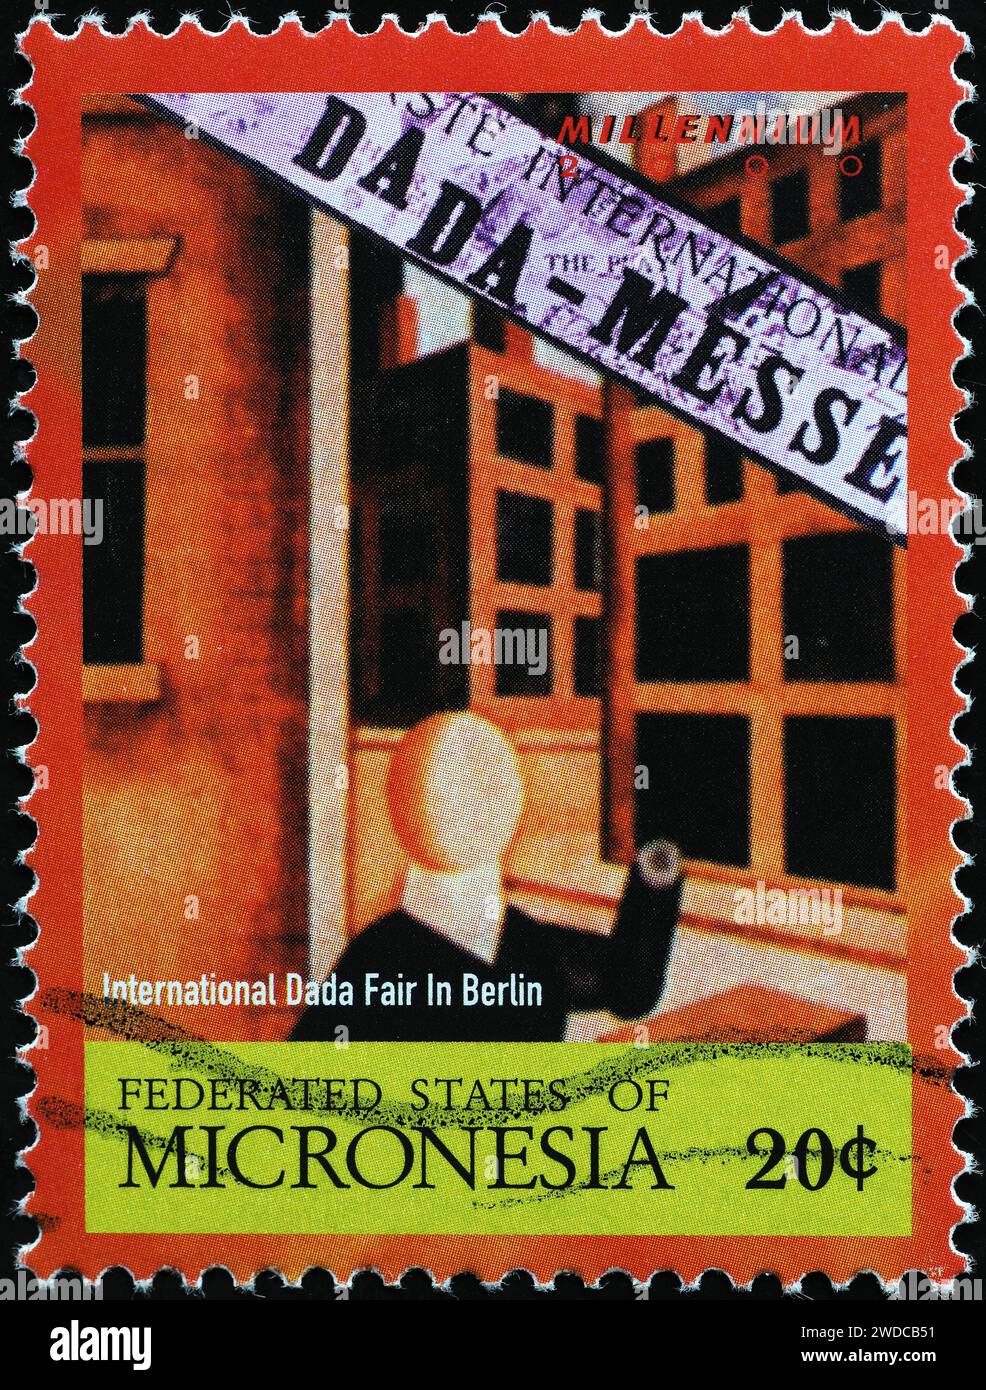 International dada fair of 1920 in Berlin celebrated on stamp Stock Photo